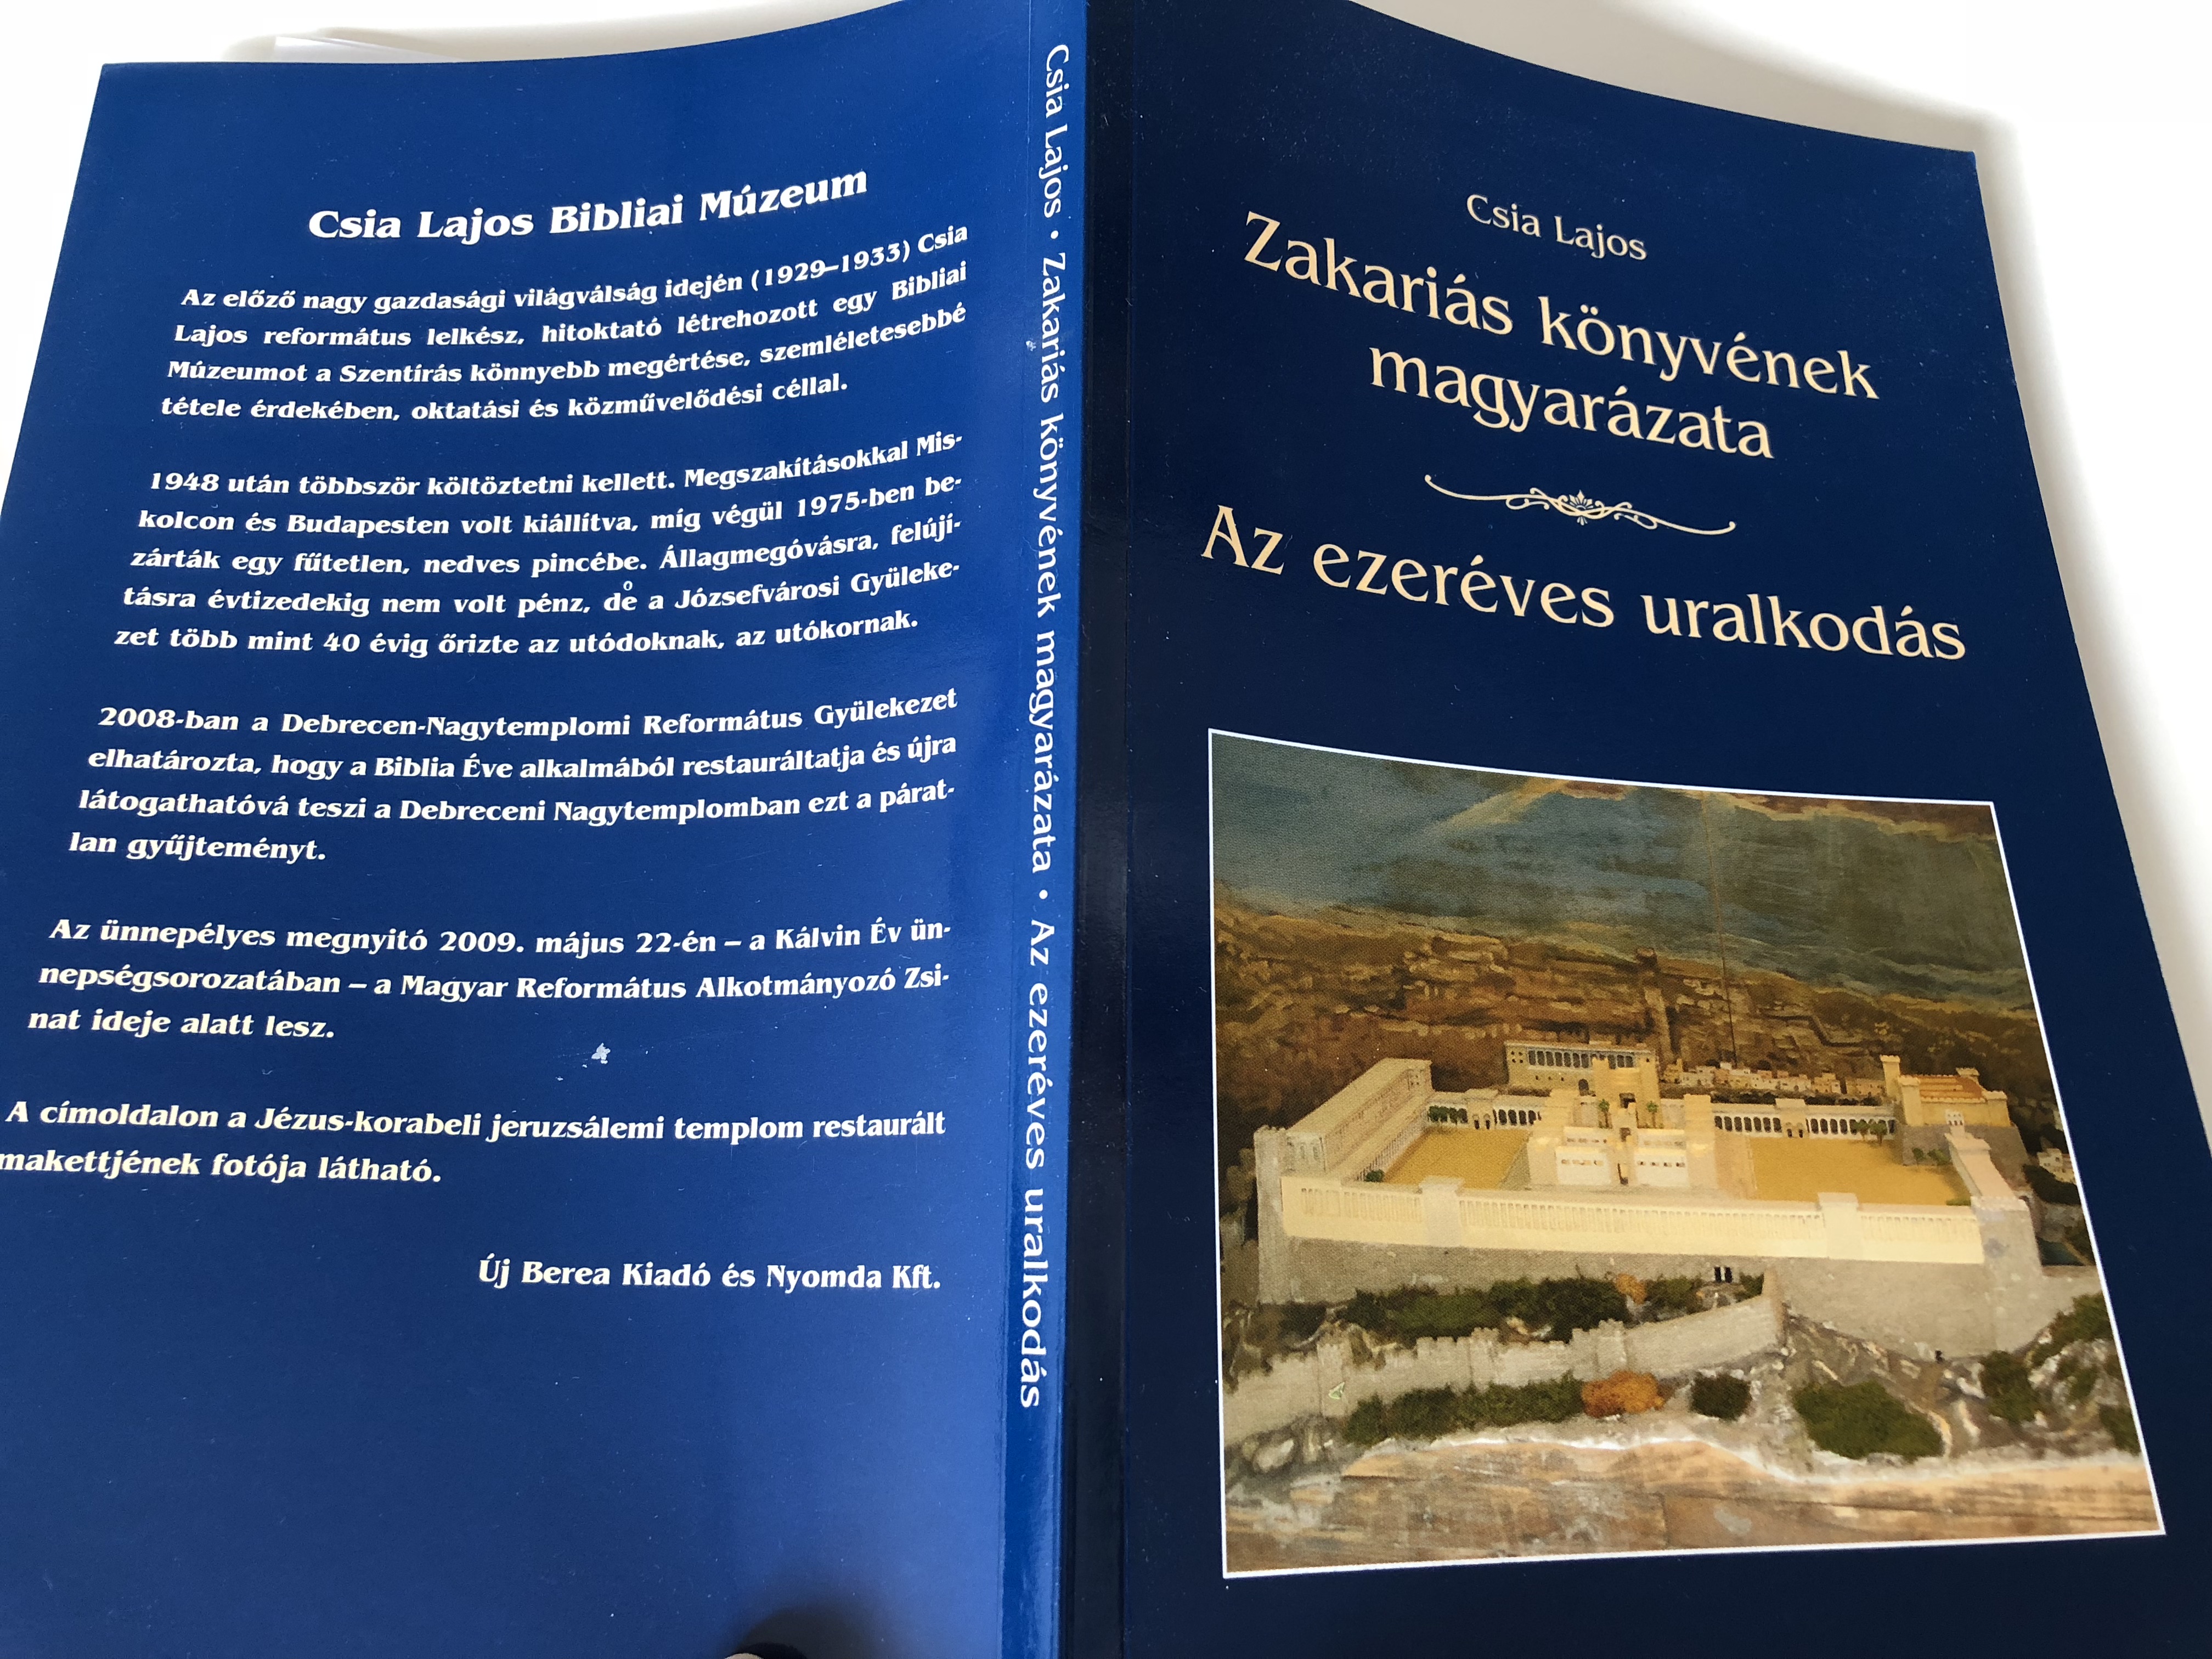 zakari-s-k-nyv-nek-magyar-zata-az-ezer-ves-uralkod-s-by-csia-lajos-hungarian-language-commentary-on-the-book-of-zechariah-the-millenial-reign-j-b-rea-10-.jpg